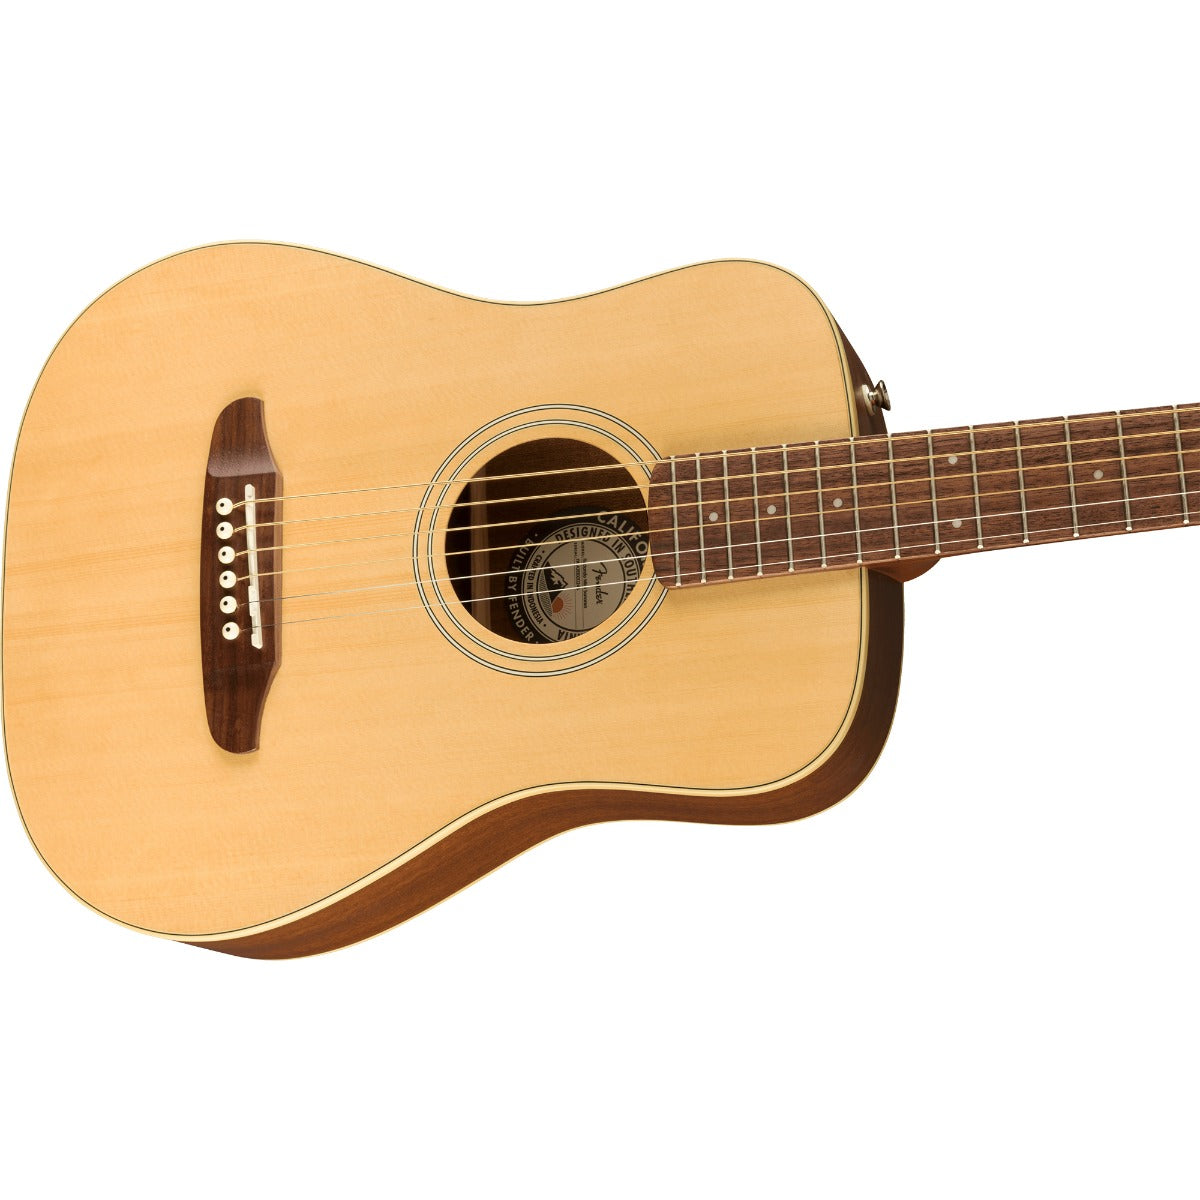 Fender Redondo Mini Acoustic Guitar with Bag - Natural